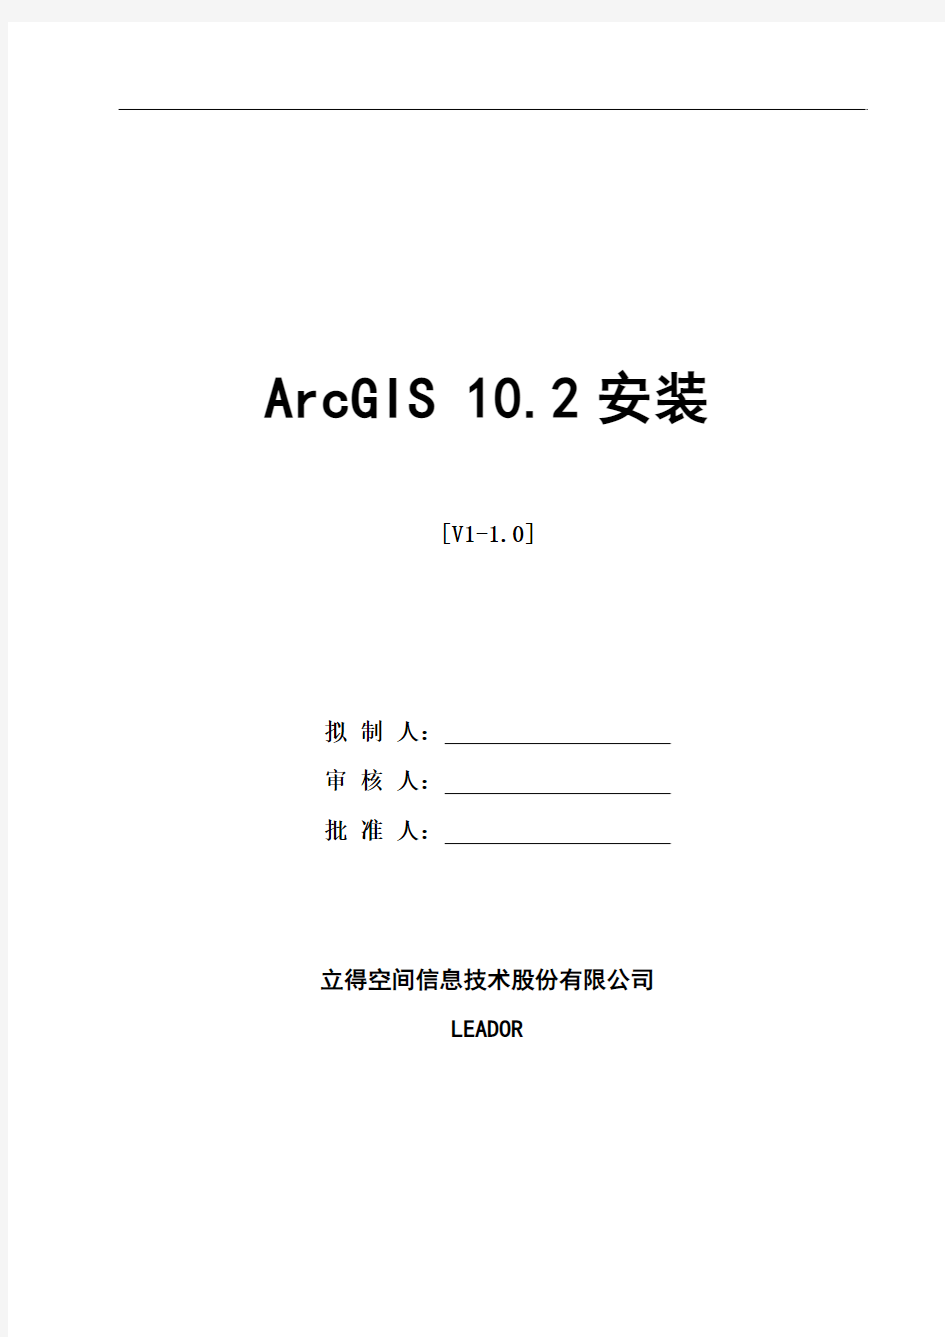 LEADOR-SI-ArcGIS 10.2安装手册